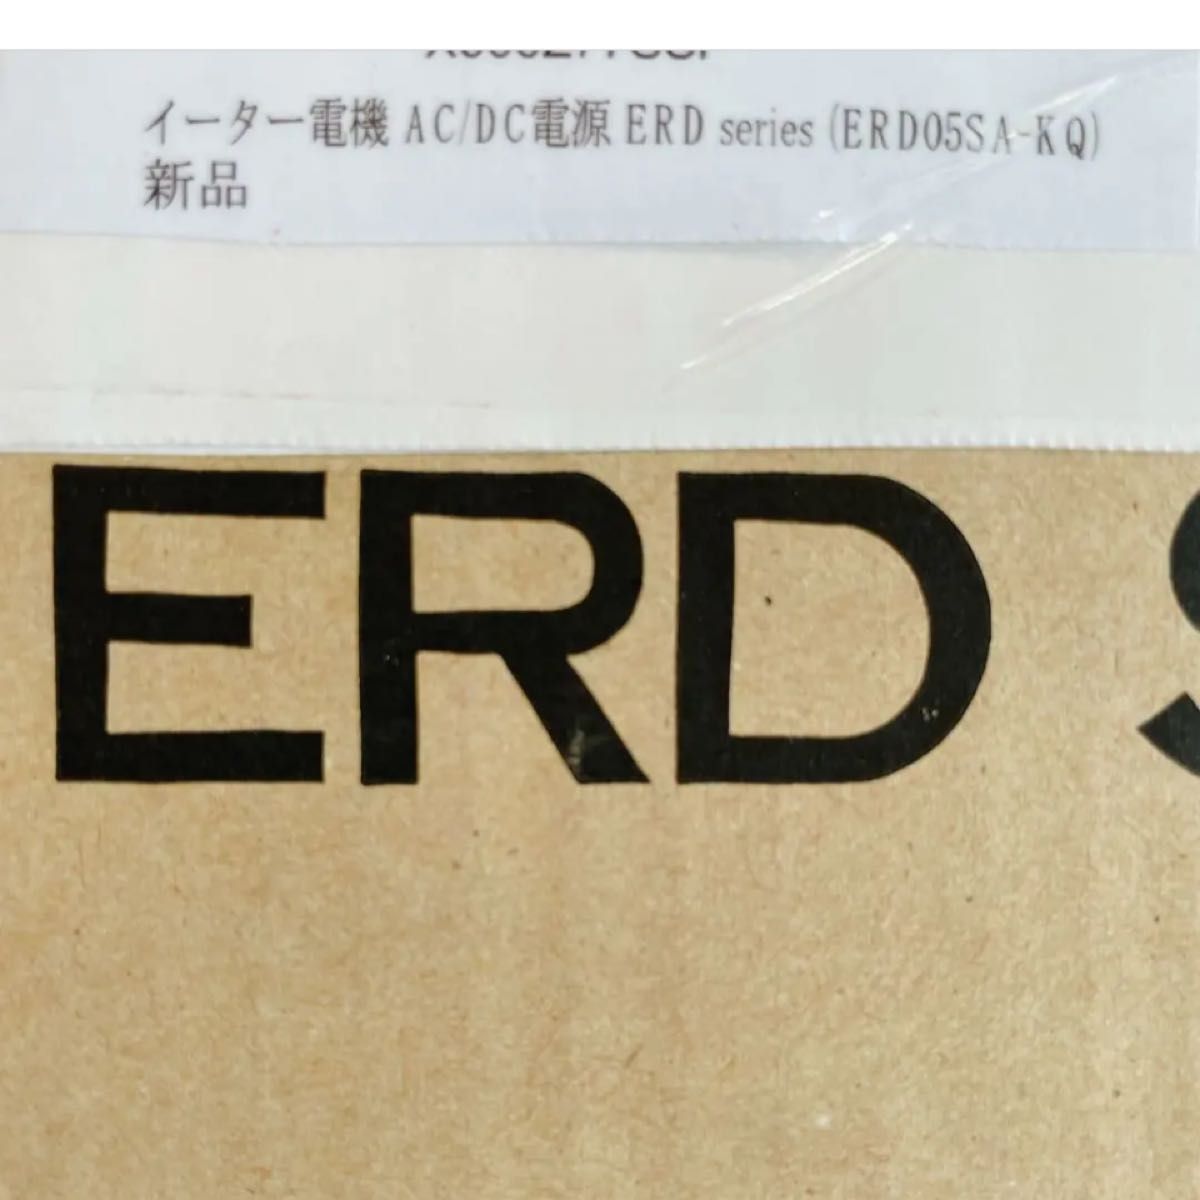 イーター電機 AC/DC電源 ERD シリーズ ERD05SA-KQ